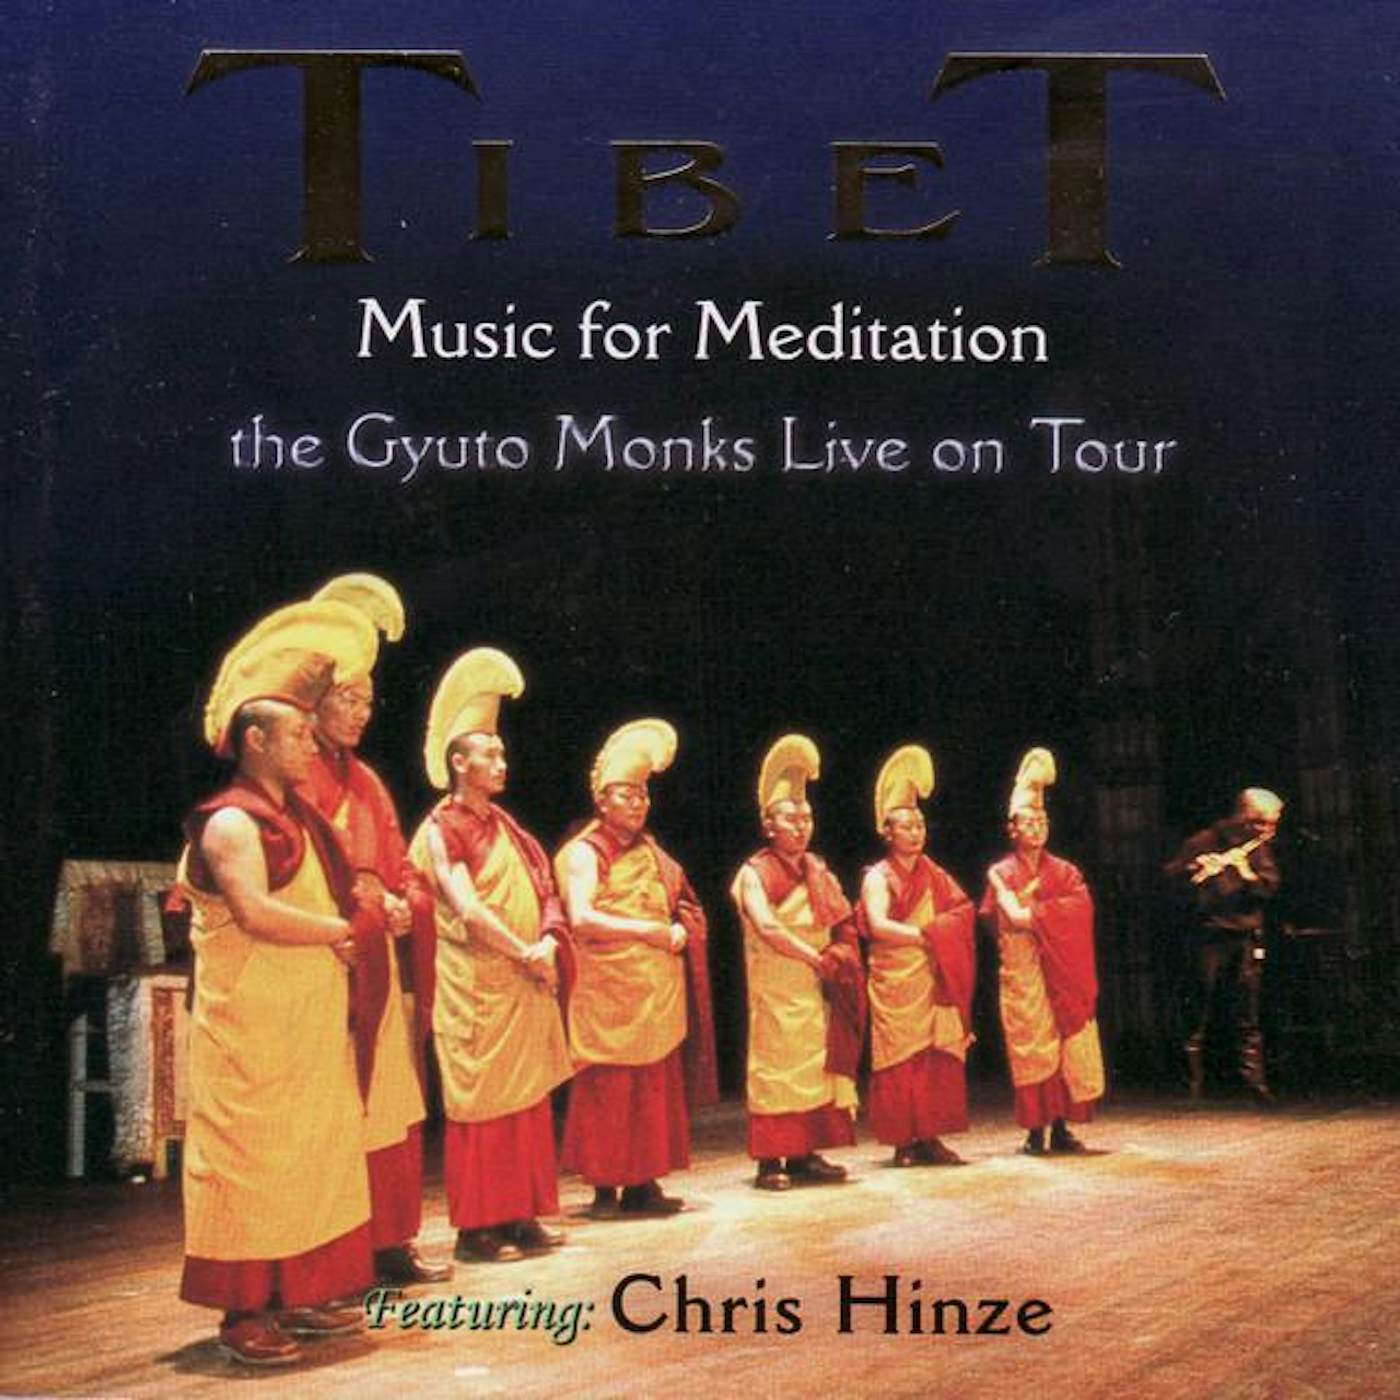 The Gyuto Monks